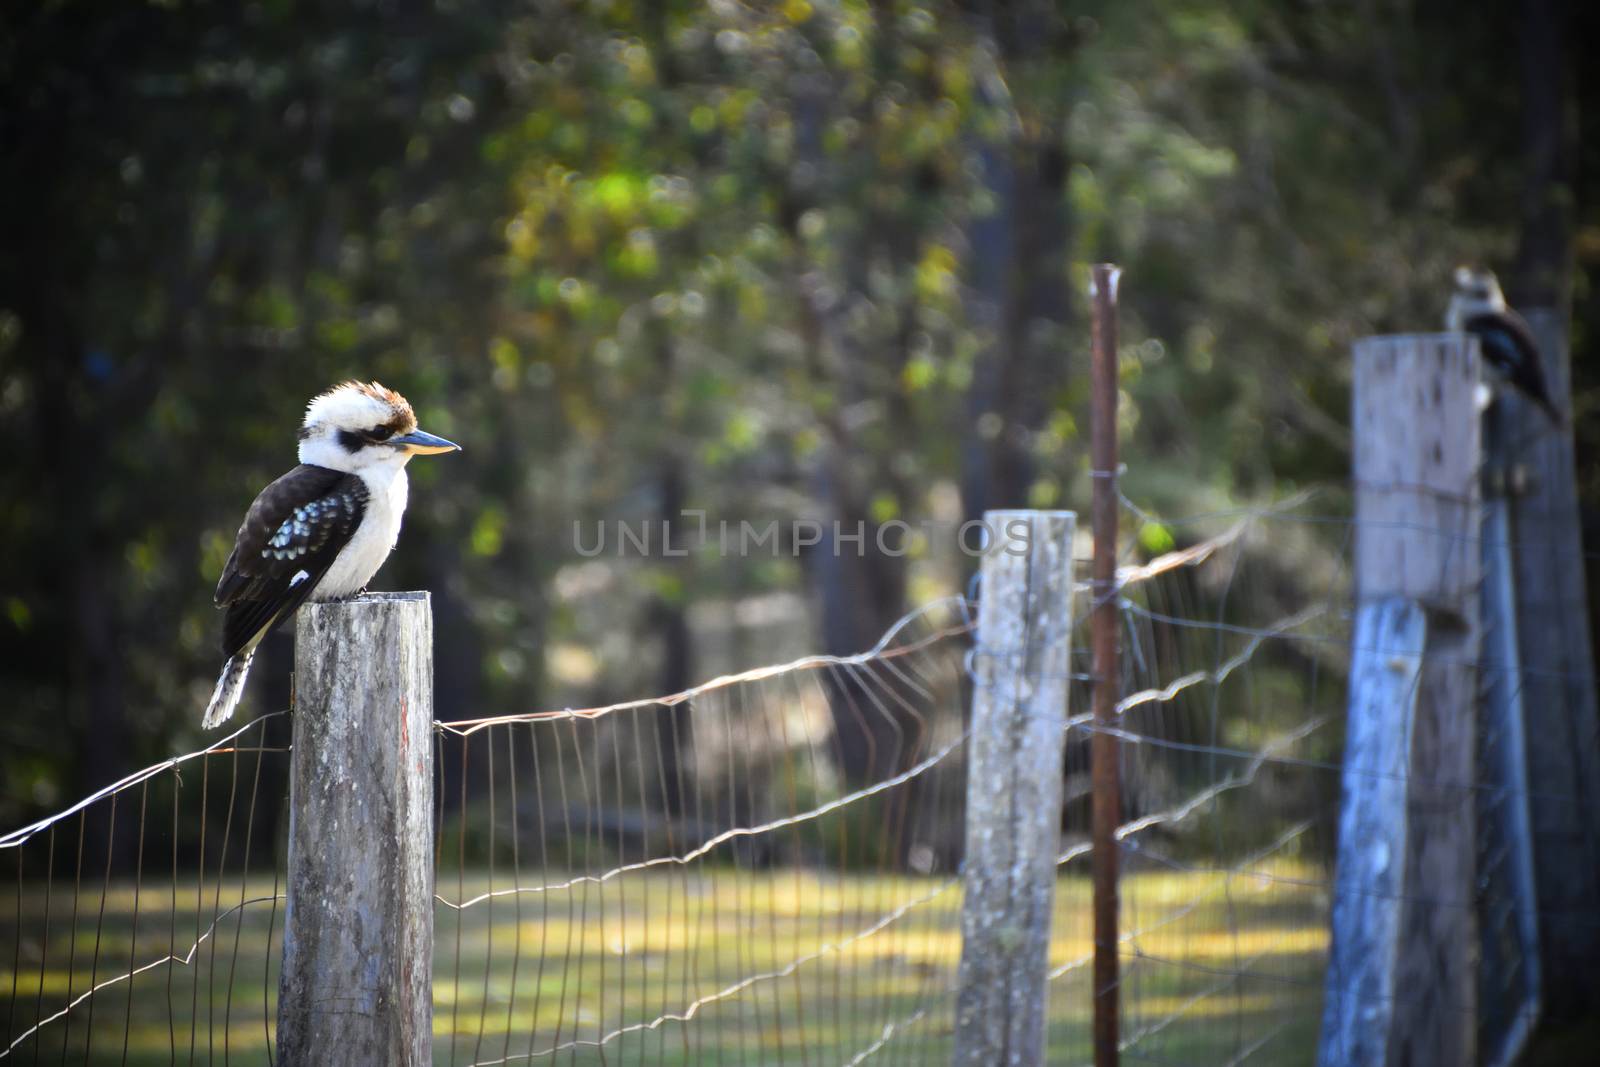 A kookaburra sitting on a wire fence